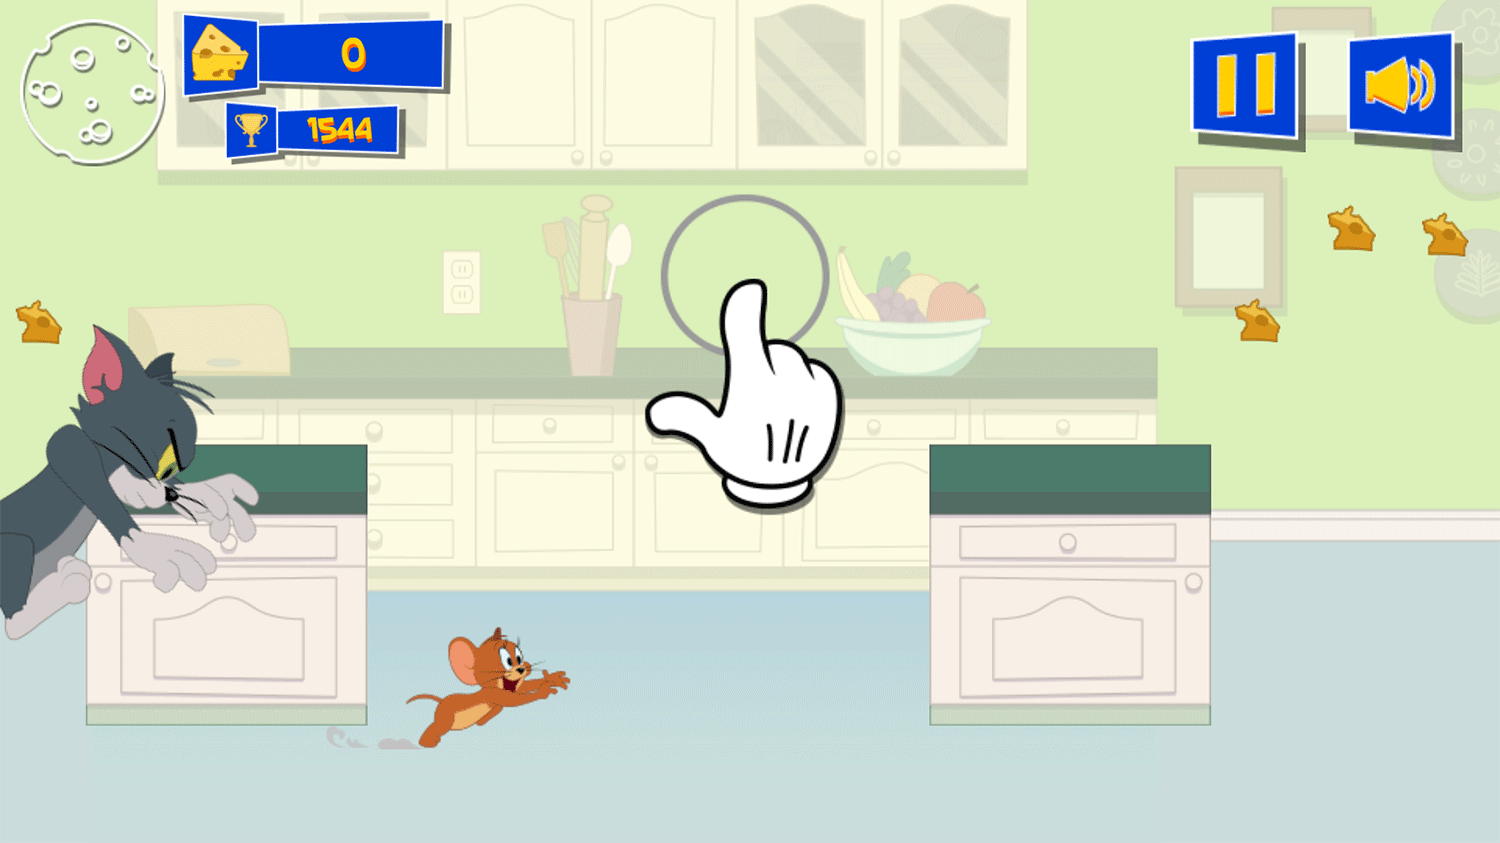 The Tom and Jerry Cheese Swipe Game Screenshots.